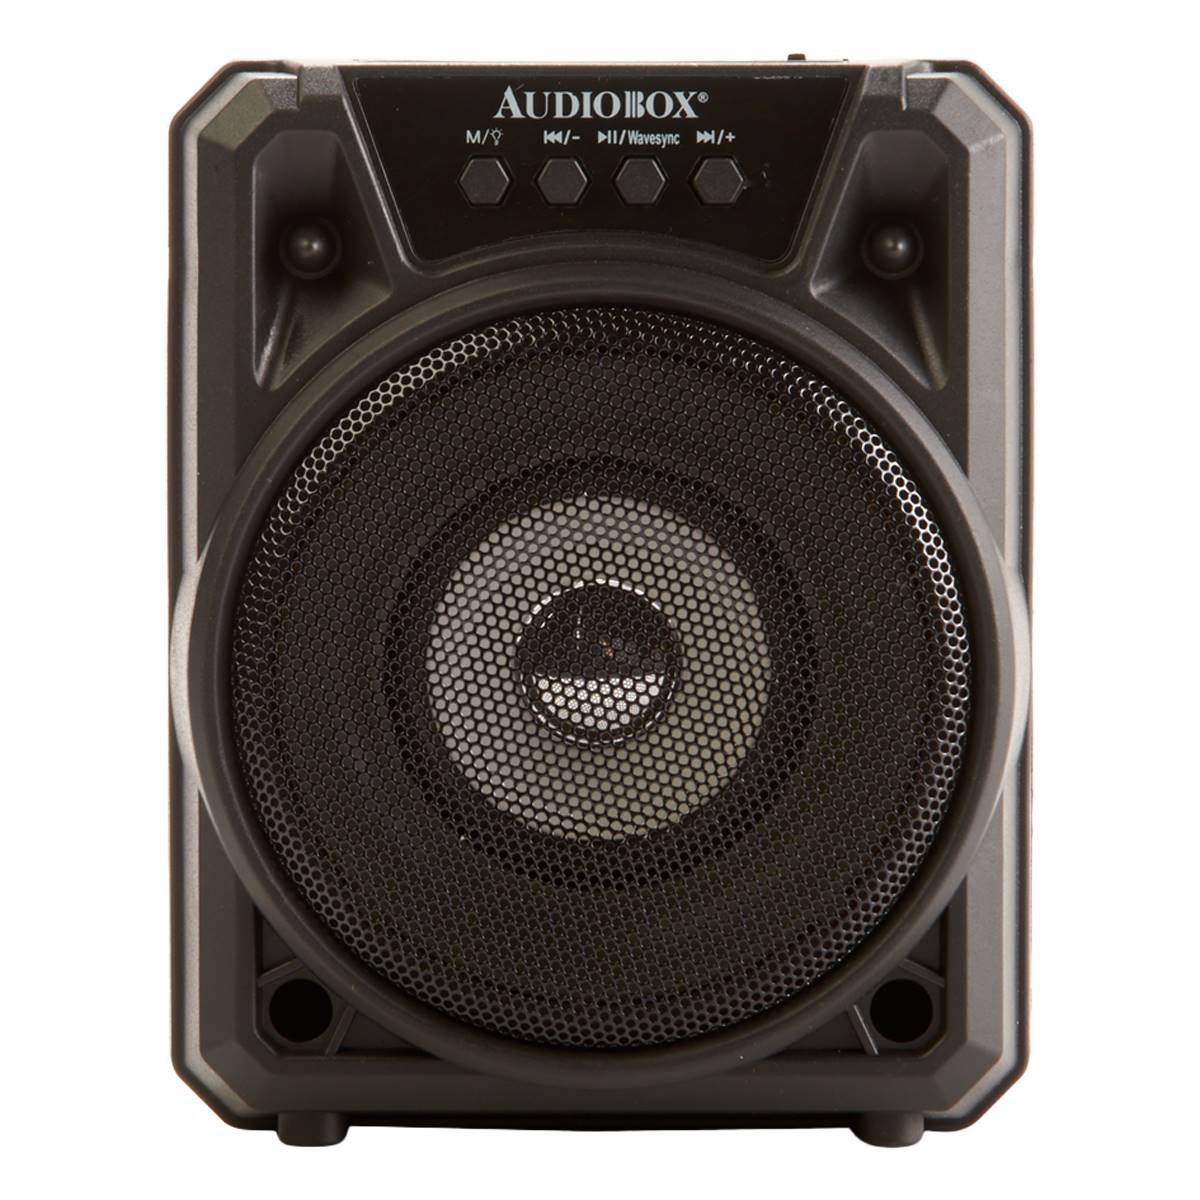 Audiobox 3in. Speaker With Ring Light